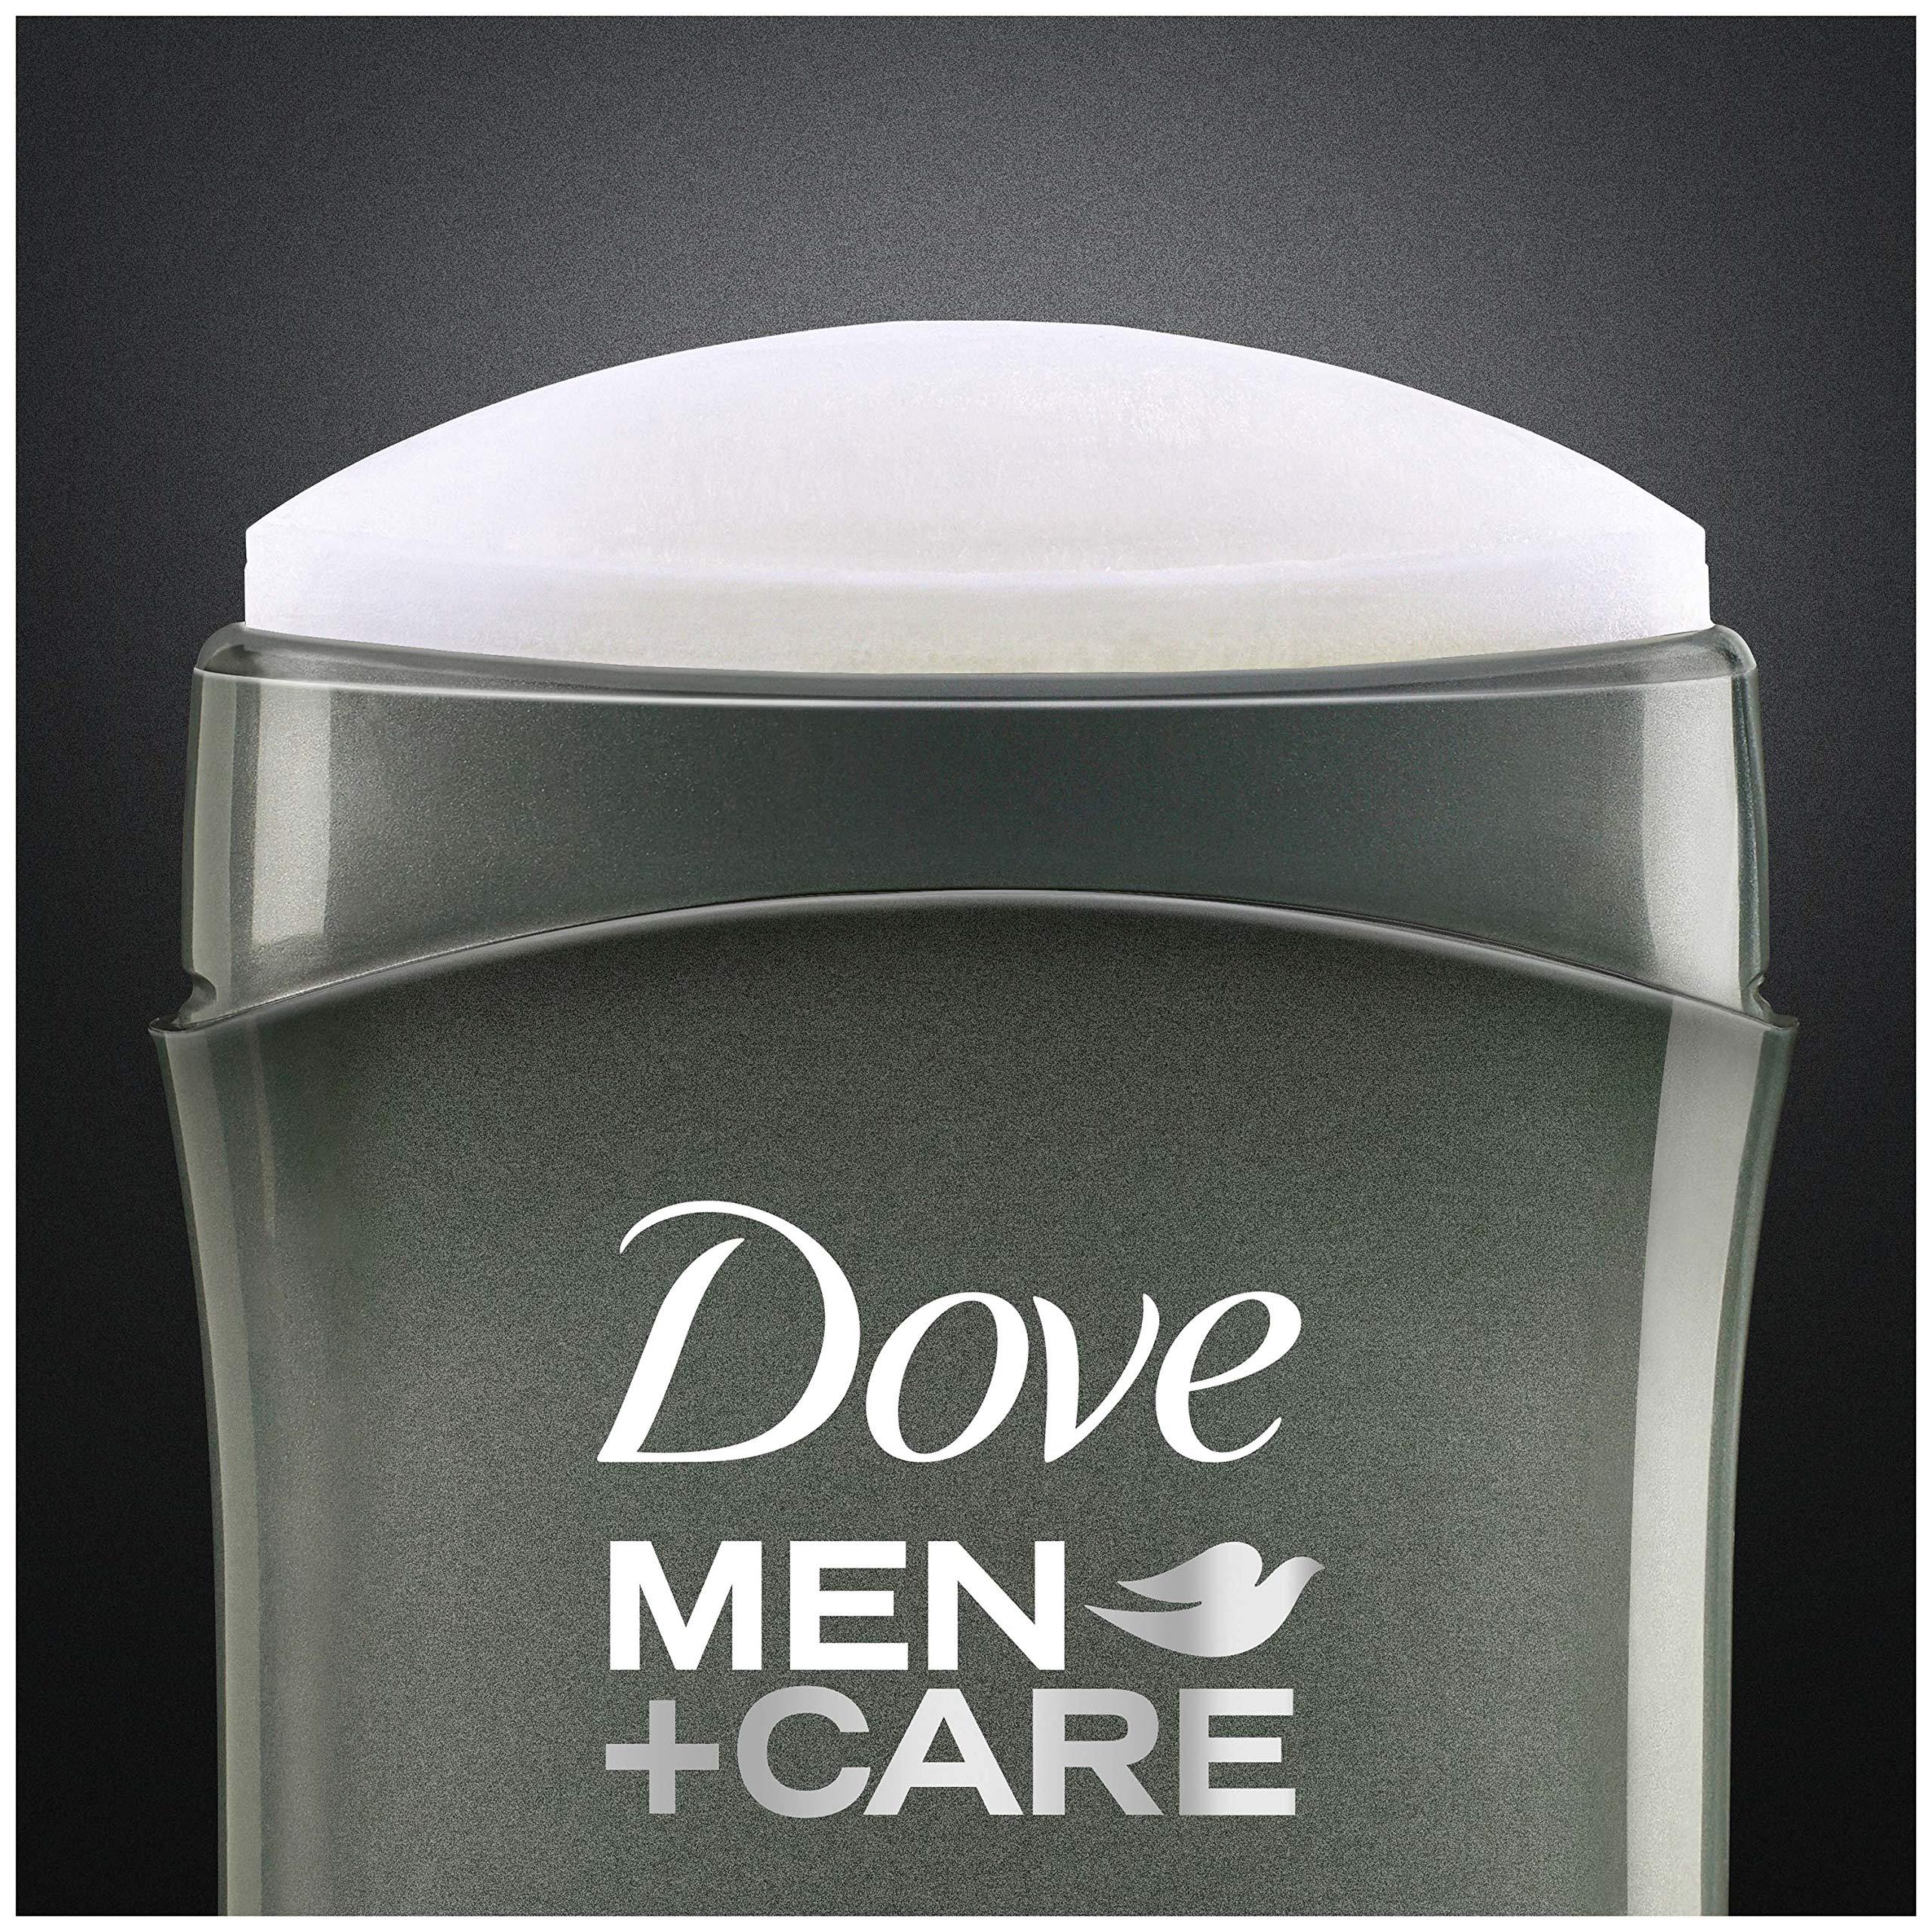 Dove Men+Care No White Marks Antiperspirant Stick, Invisible Fresh, 2.7 Ounce